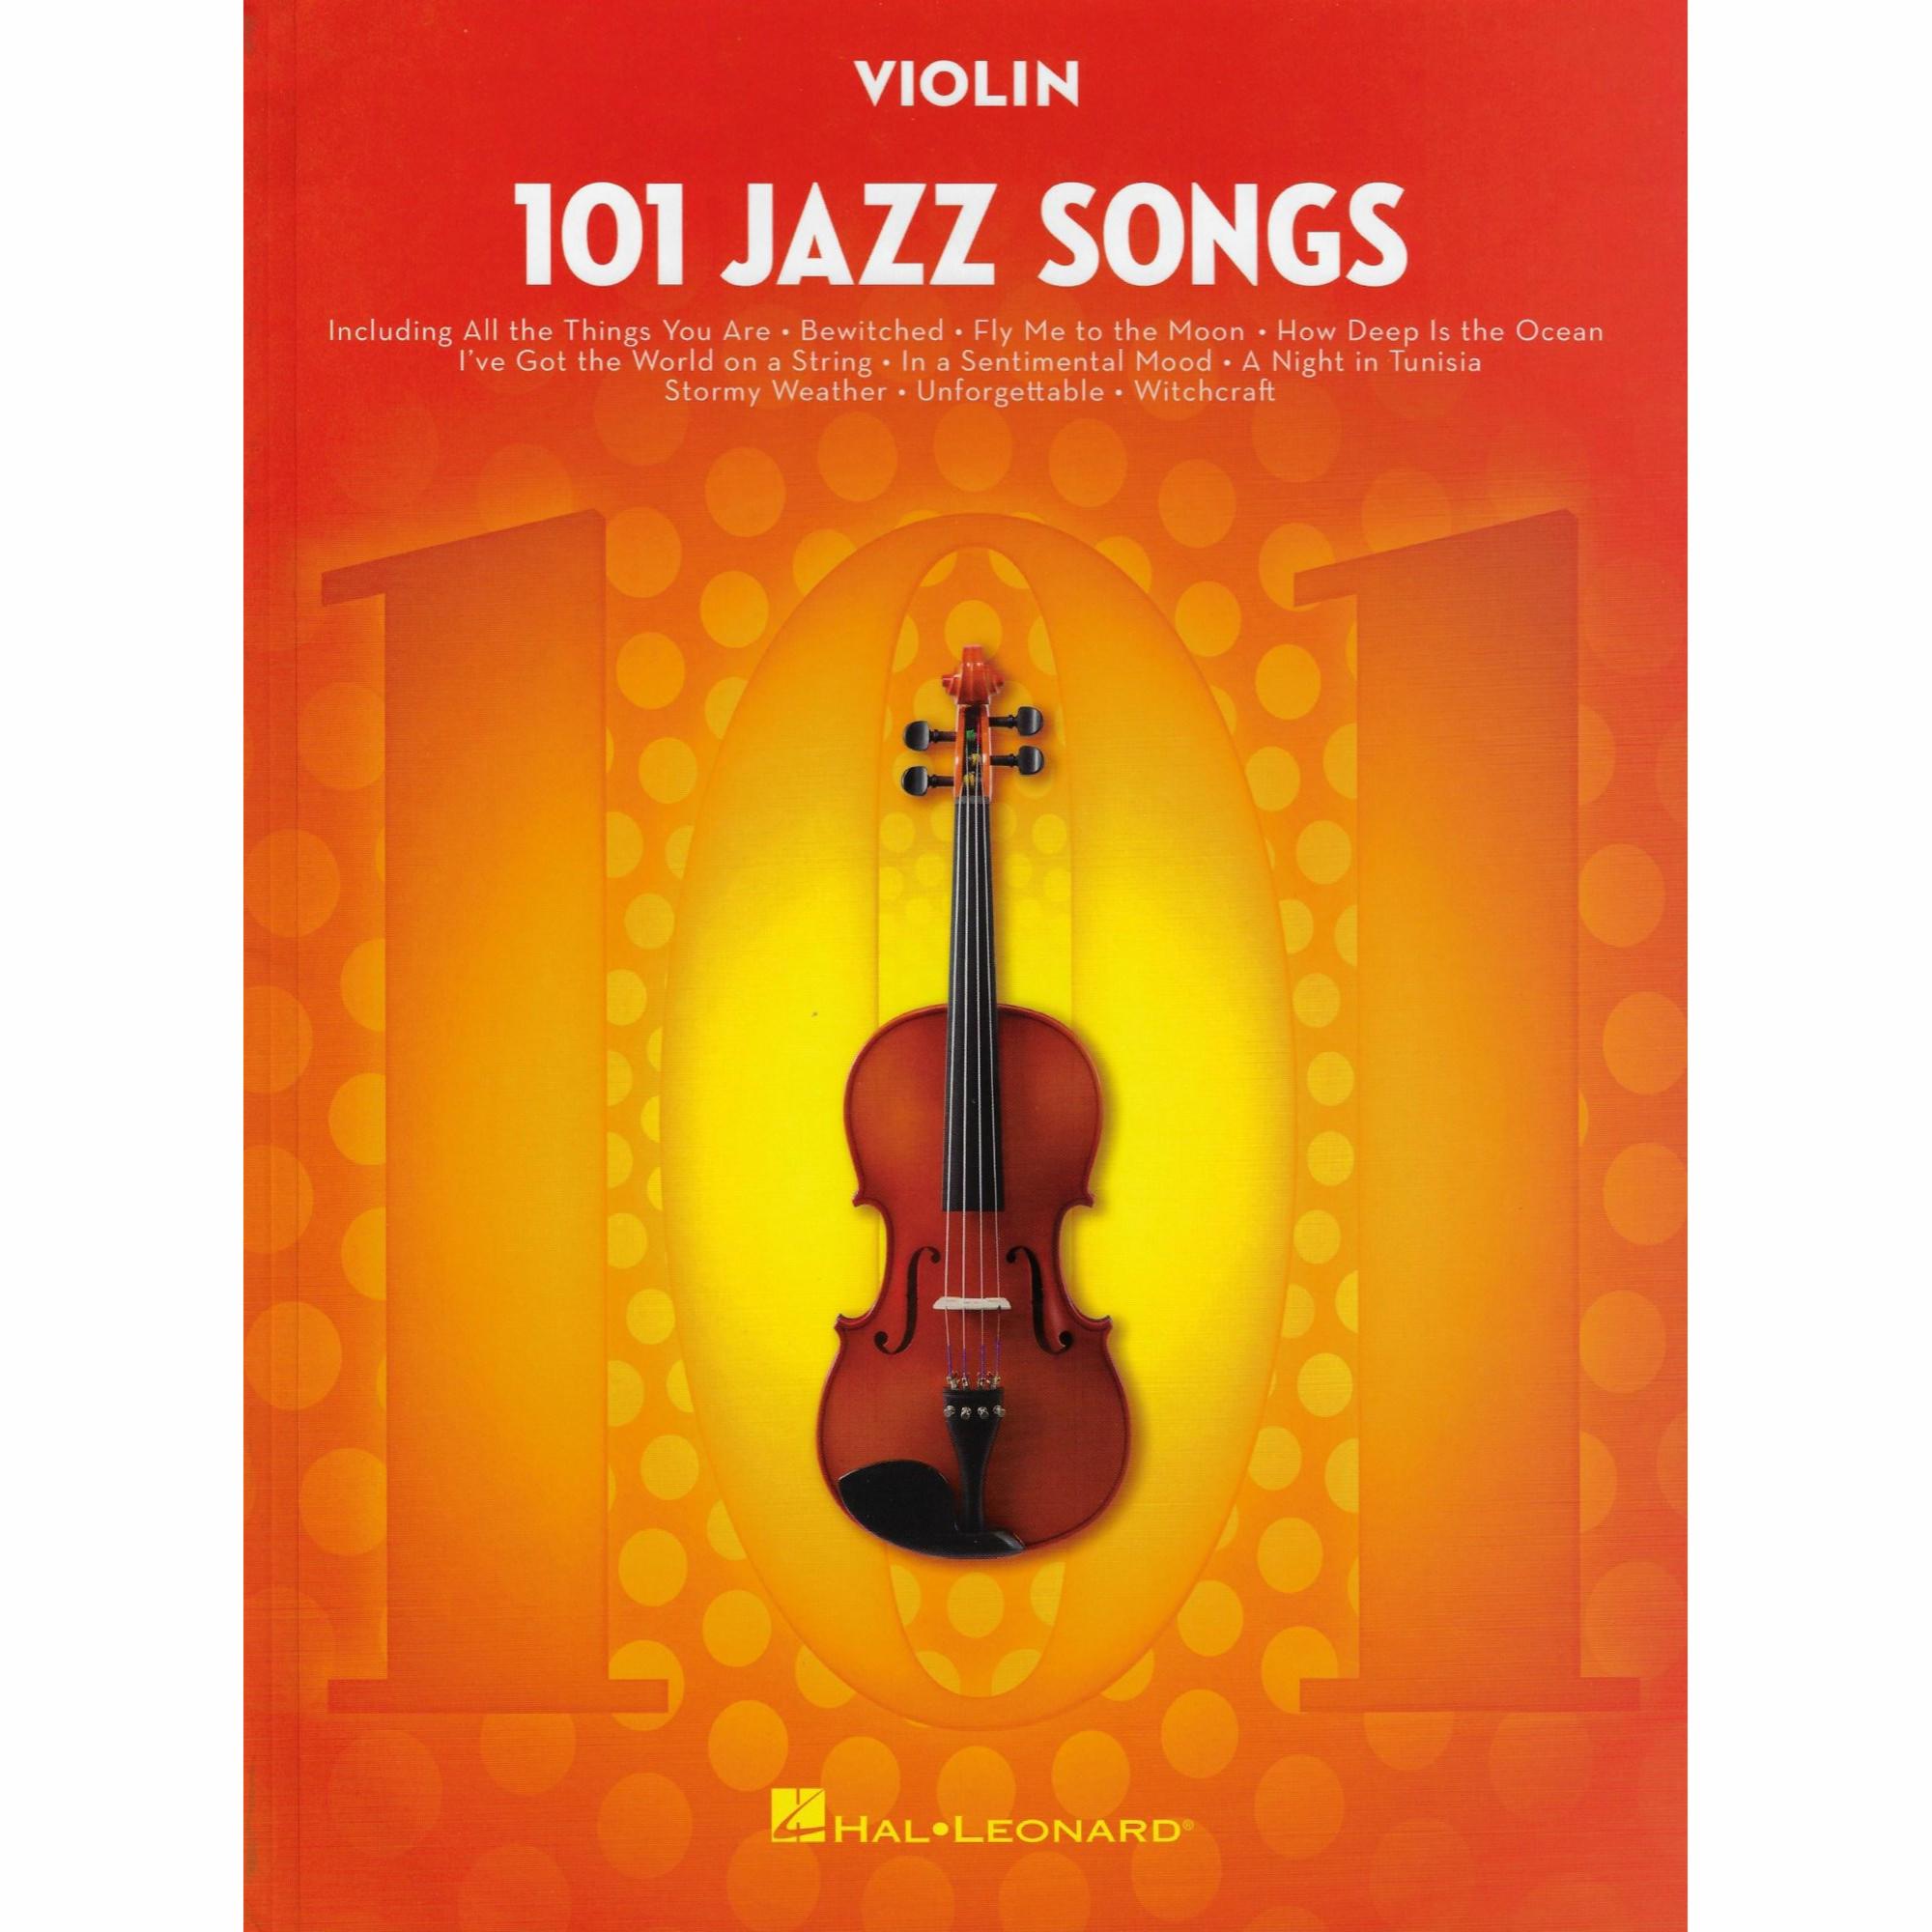 101 Jazz Songs for Violin, Viola, or Cello